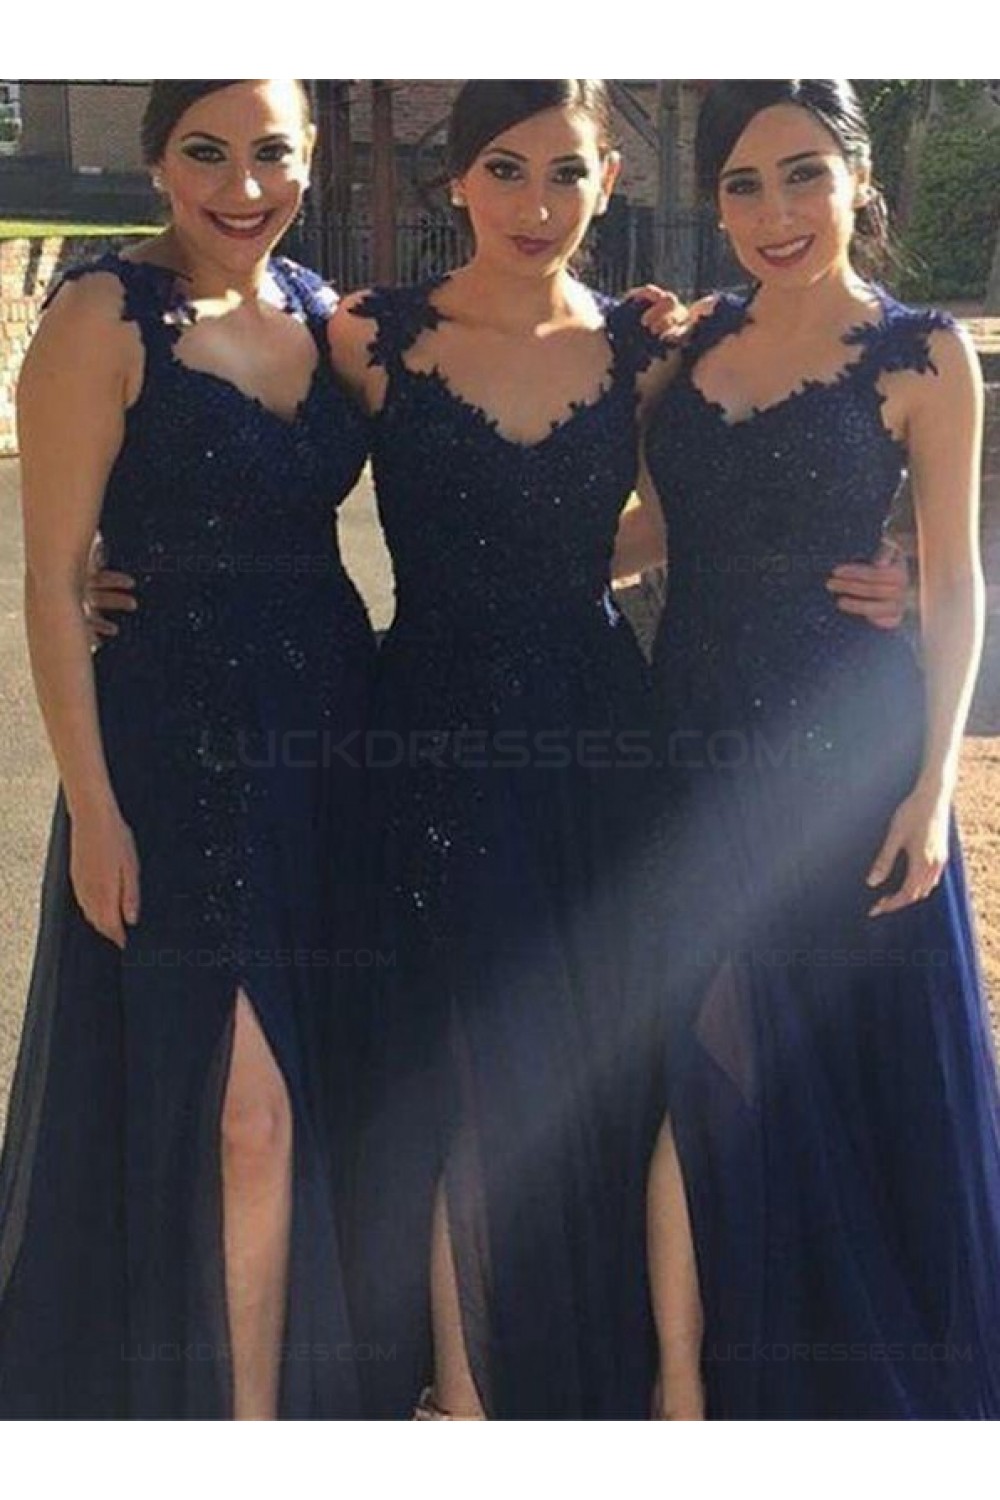 navy blue long bridesmaid dresses